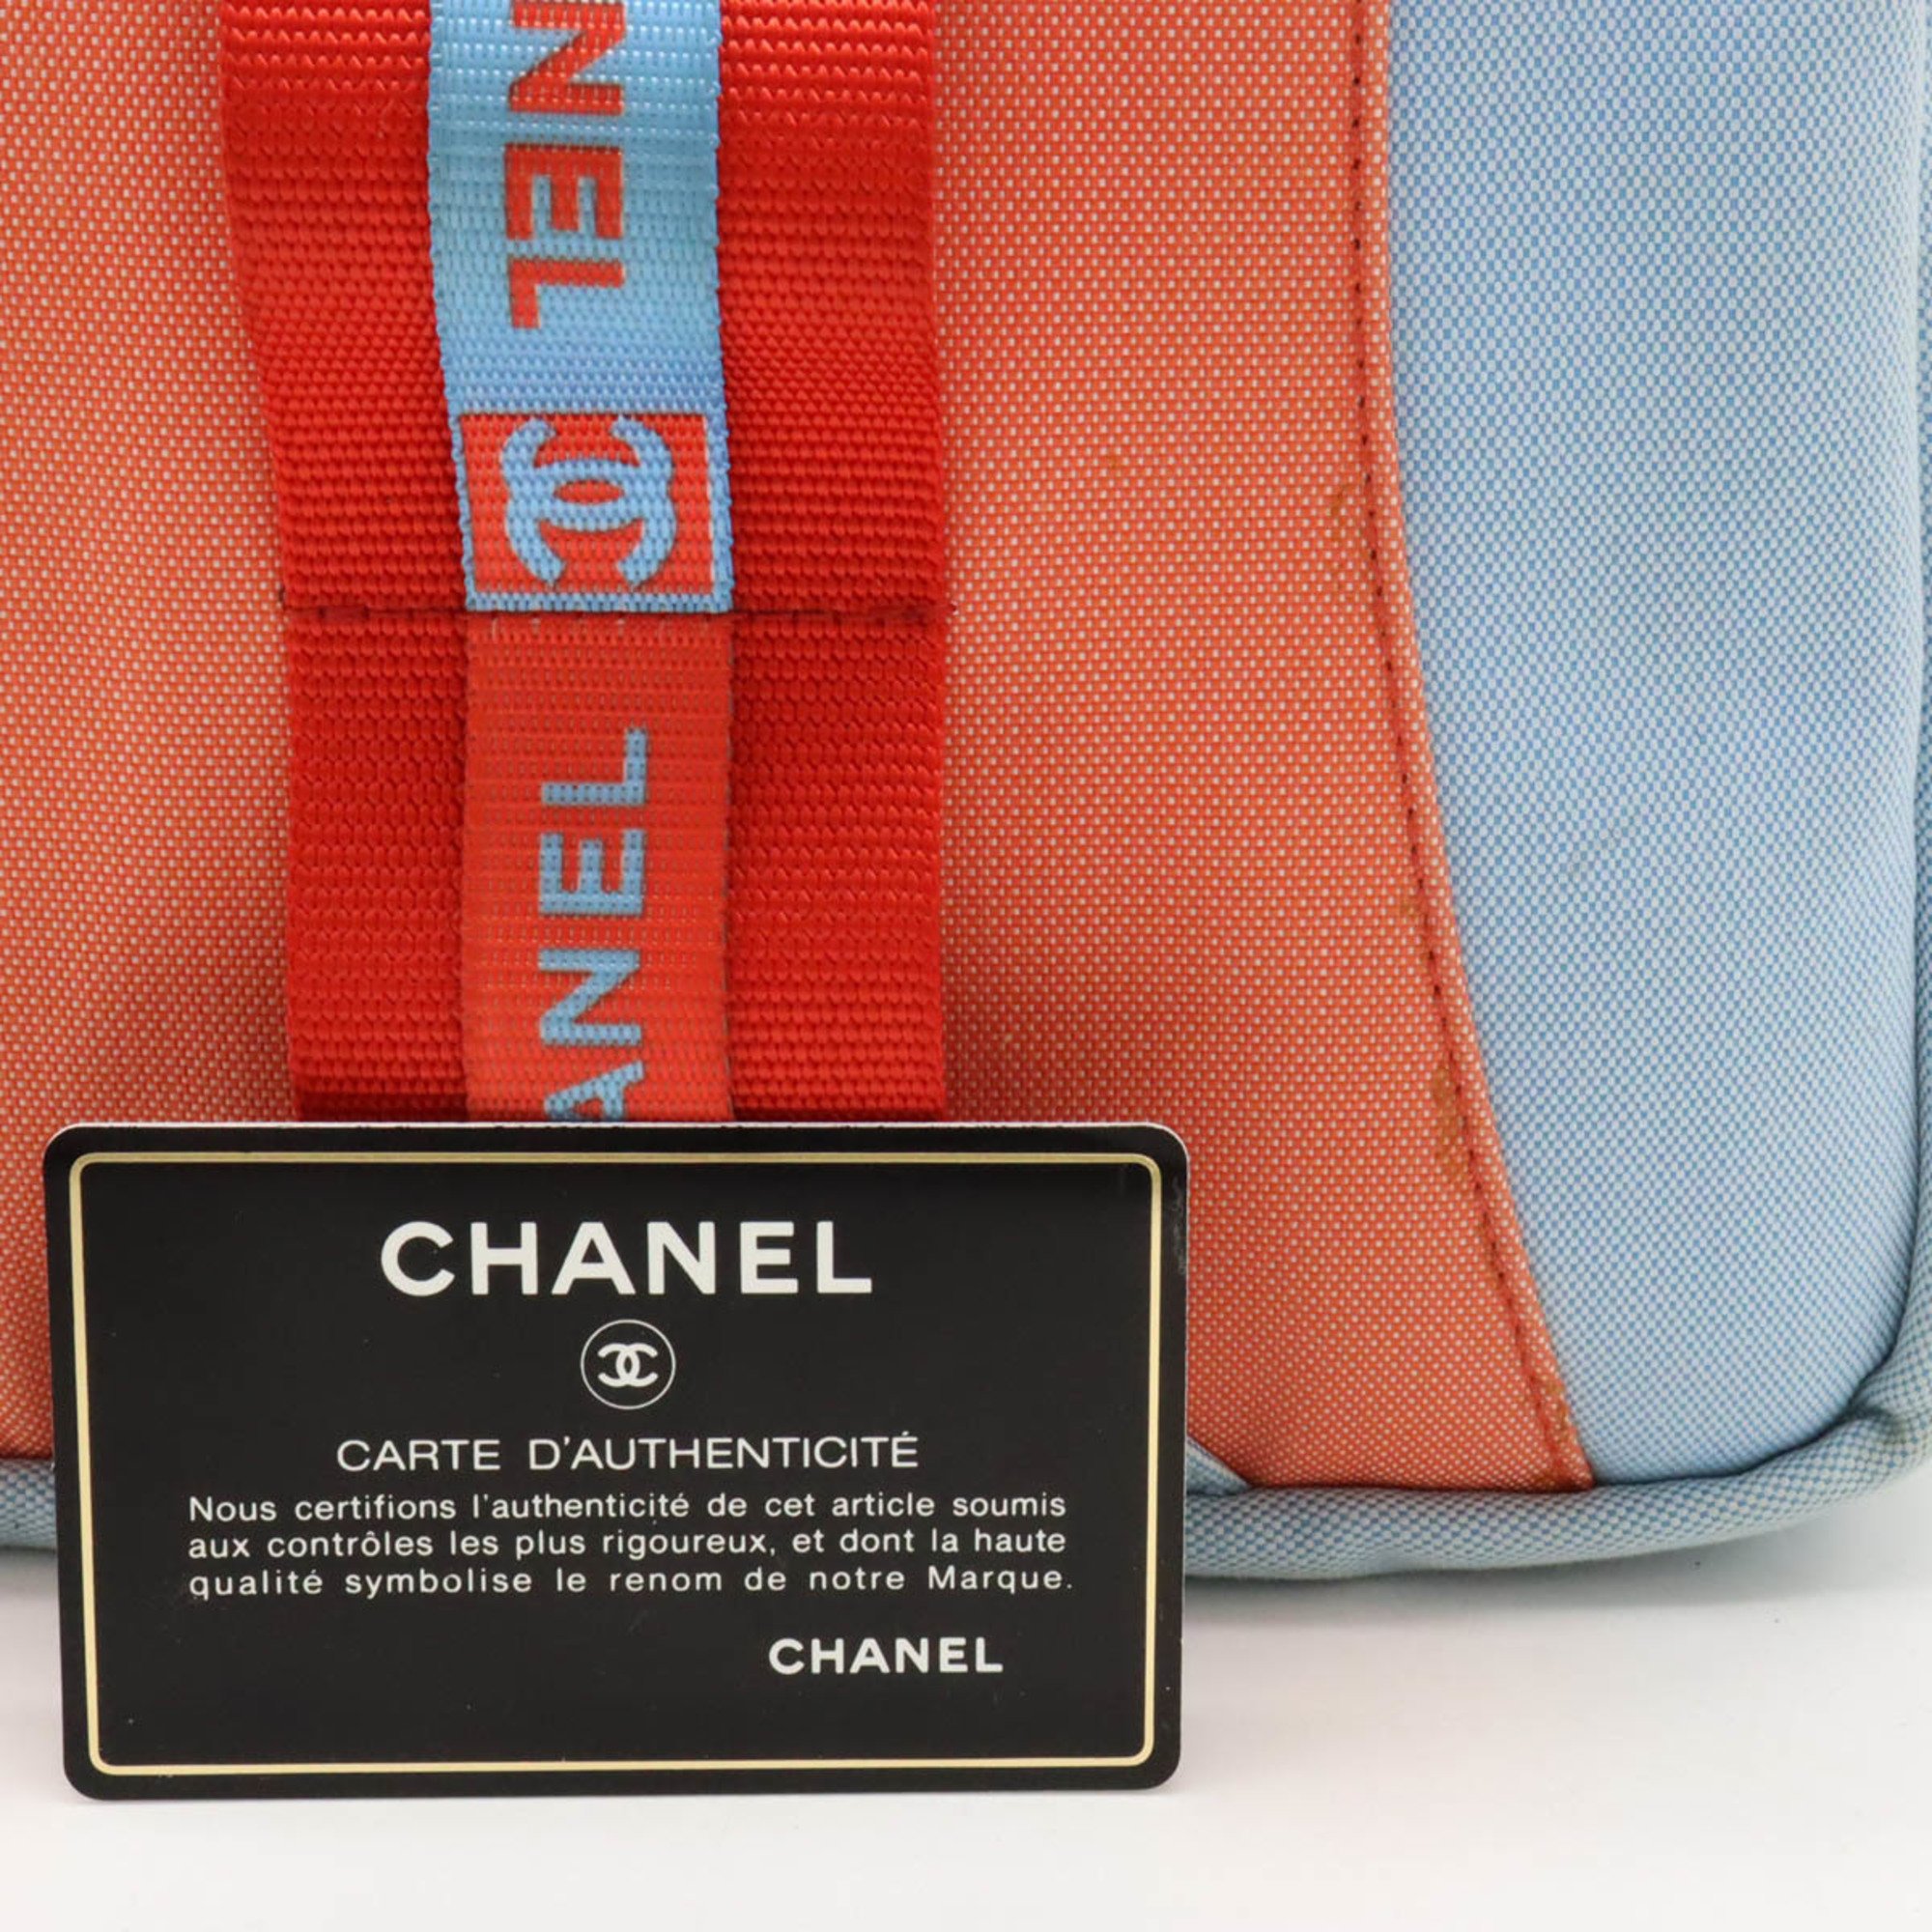 CHANEL Chanel Sport Line Coco Mark Shoulder Bag Nylon Canvas Light Blue Red